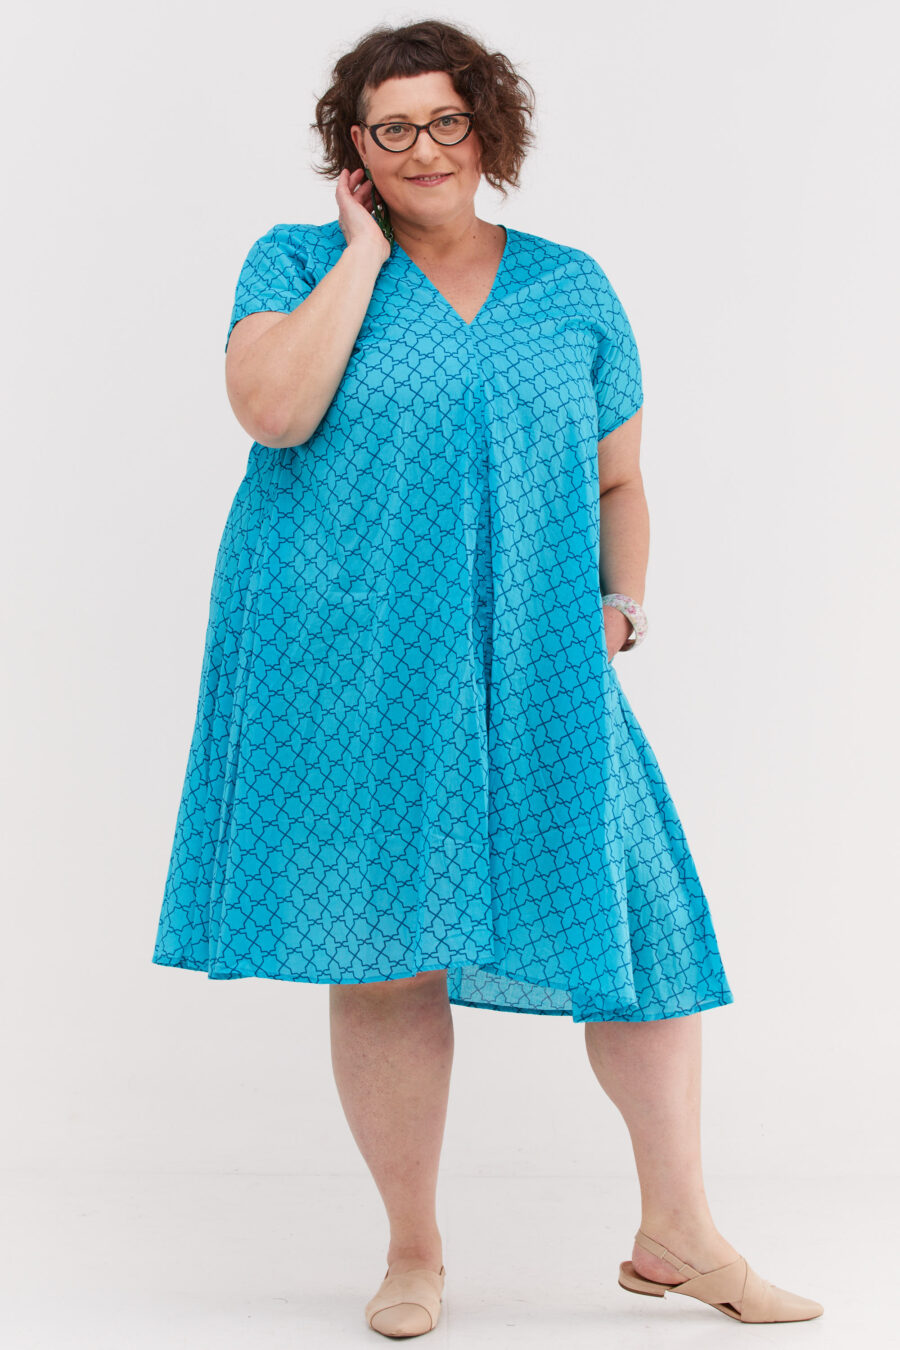 Aiya’le dress | Uniquely designed midi oversize dress - Tourqouise Scandinavian print, tourqouise dress with dark blue geometric print by comfort zone boutique